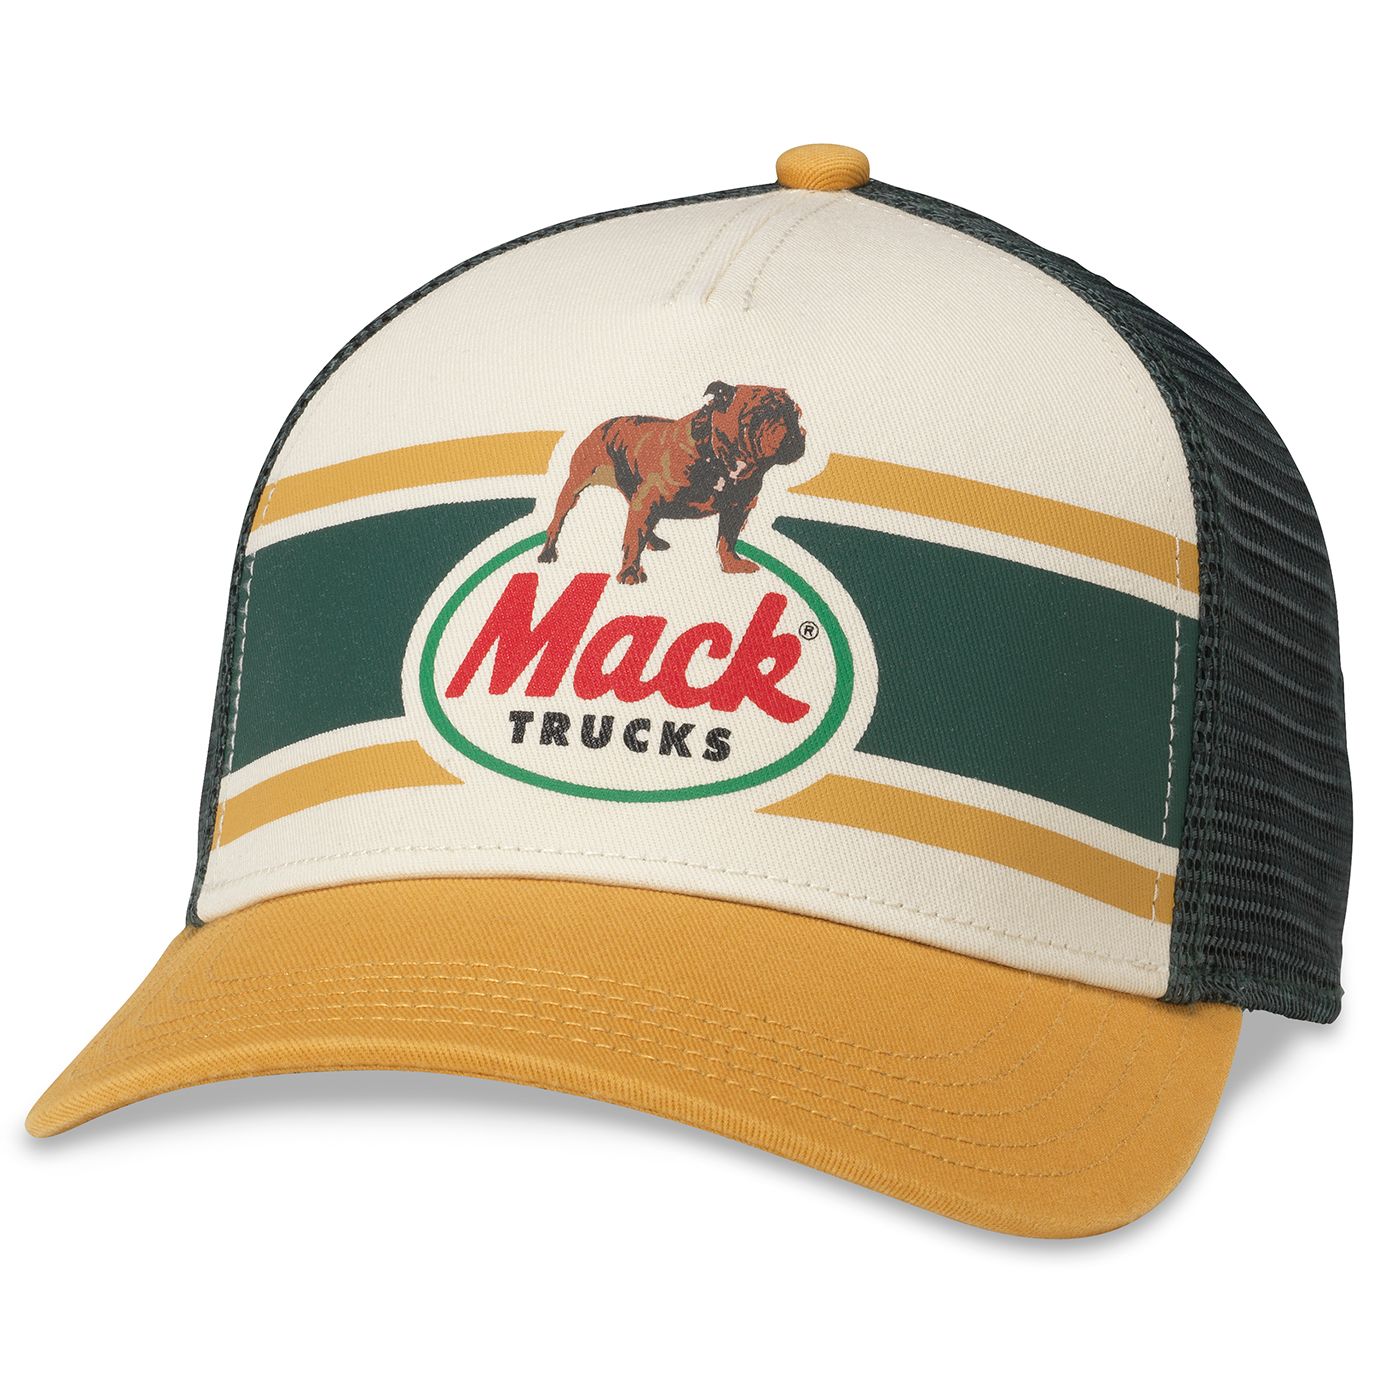 MACK TRUCKS - Sinclair Hat